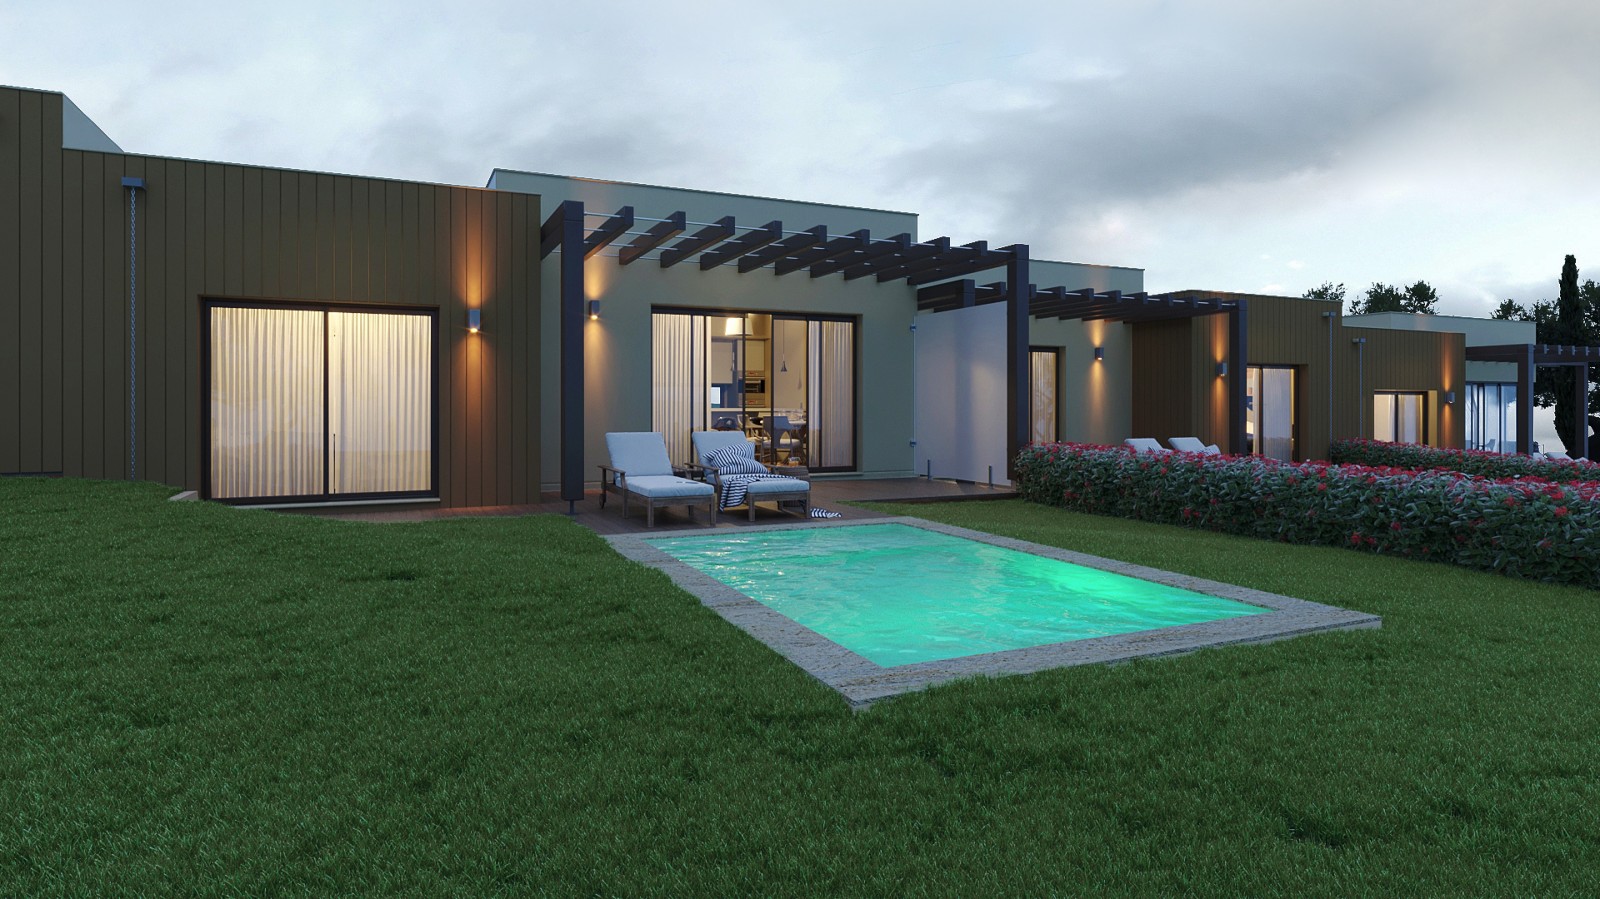 2 bedroom semi-detached villa with swimming pool for sale in Golf resort, Algarve_218830